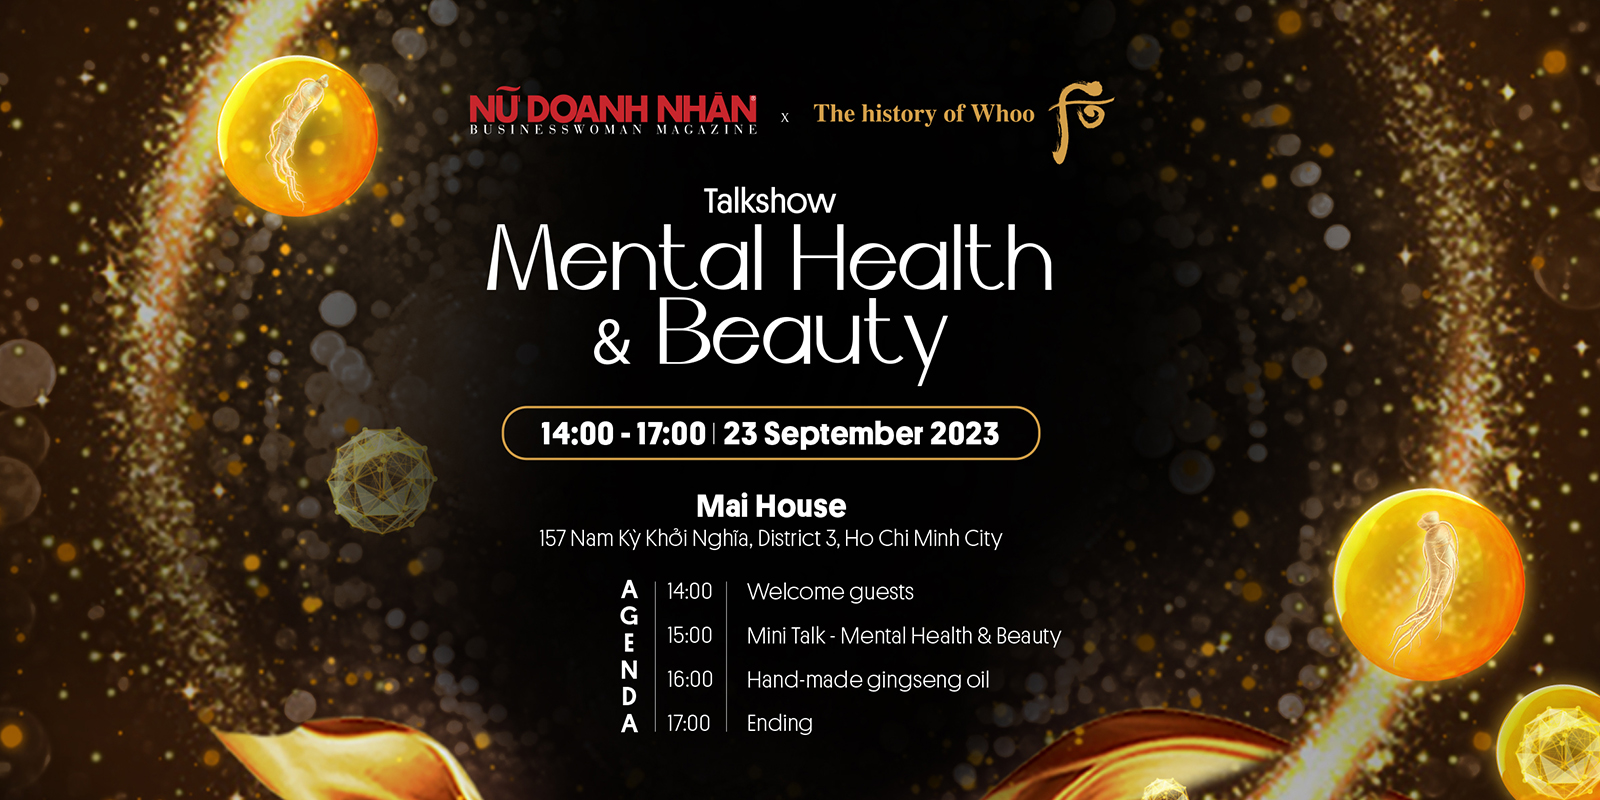 Agenda sự kiện Mental Health & Beauty